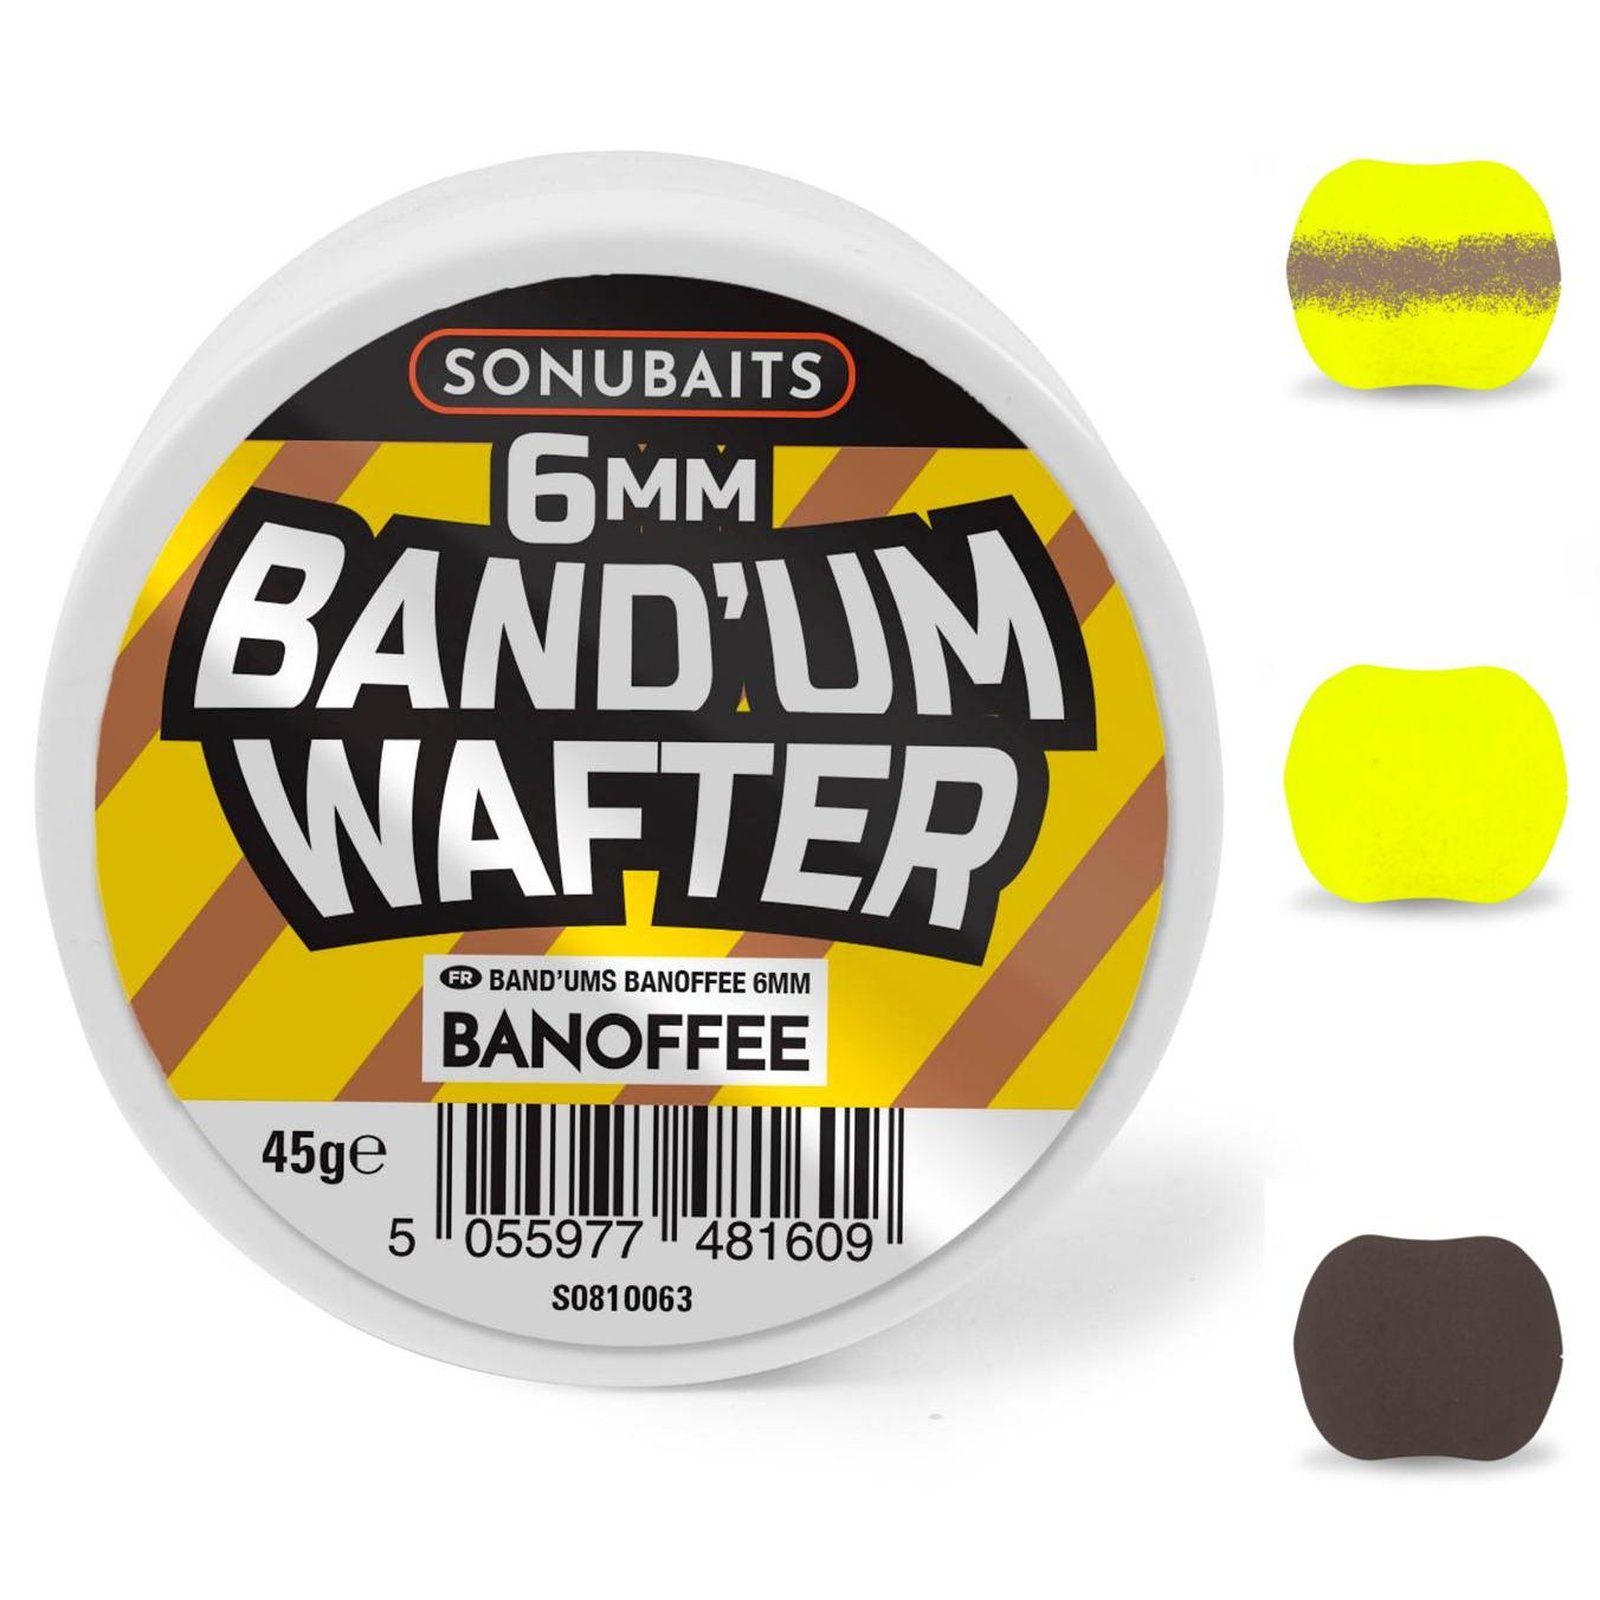 Sonubaits BandUm Wafter Banoffee 45g 10mm